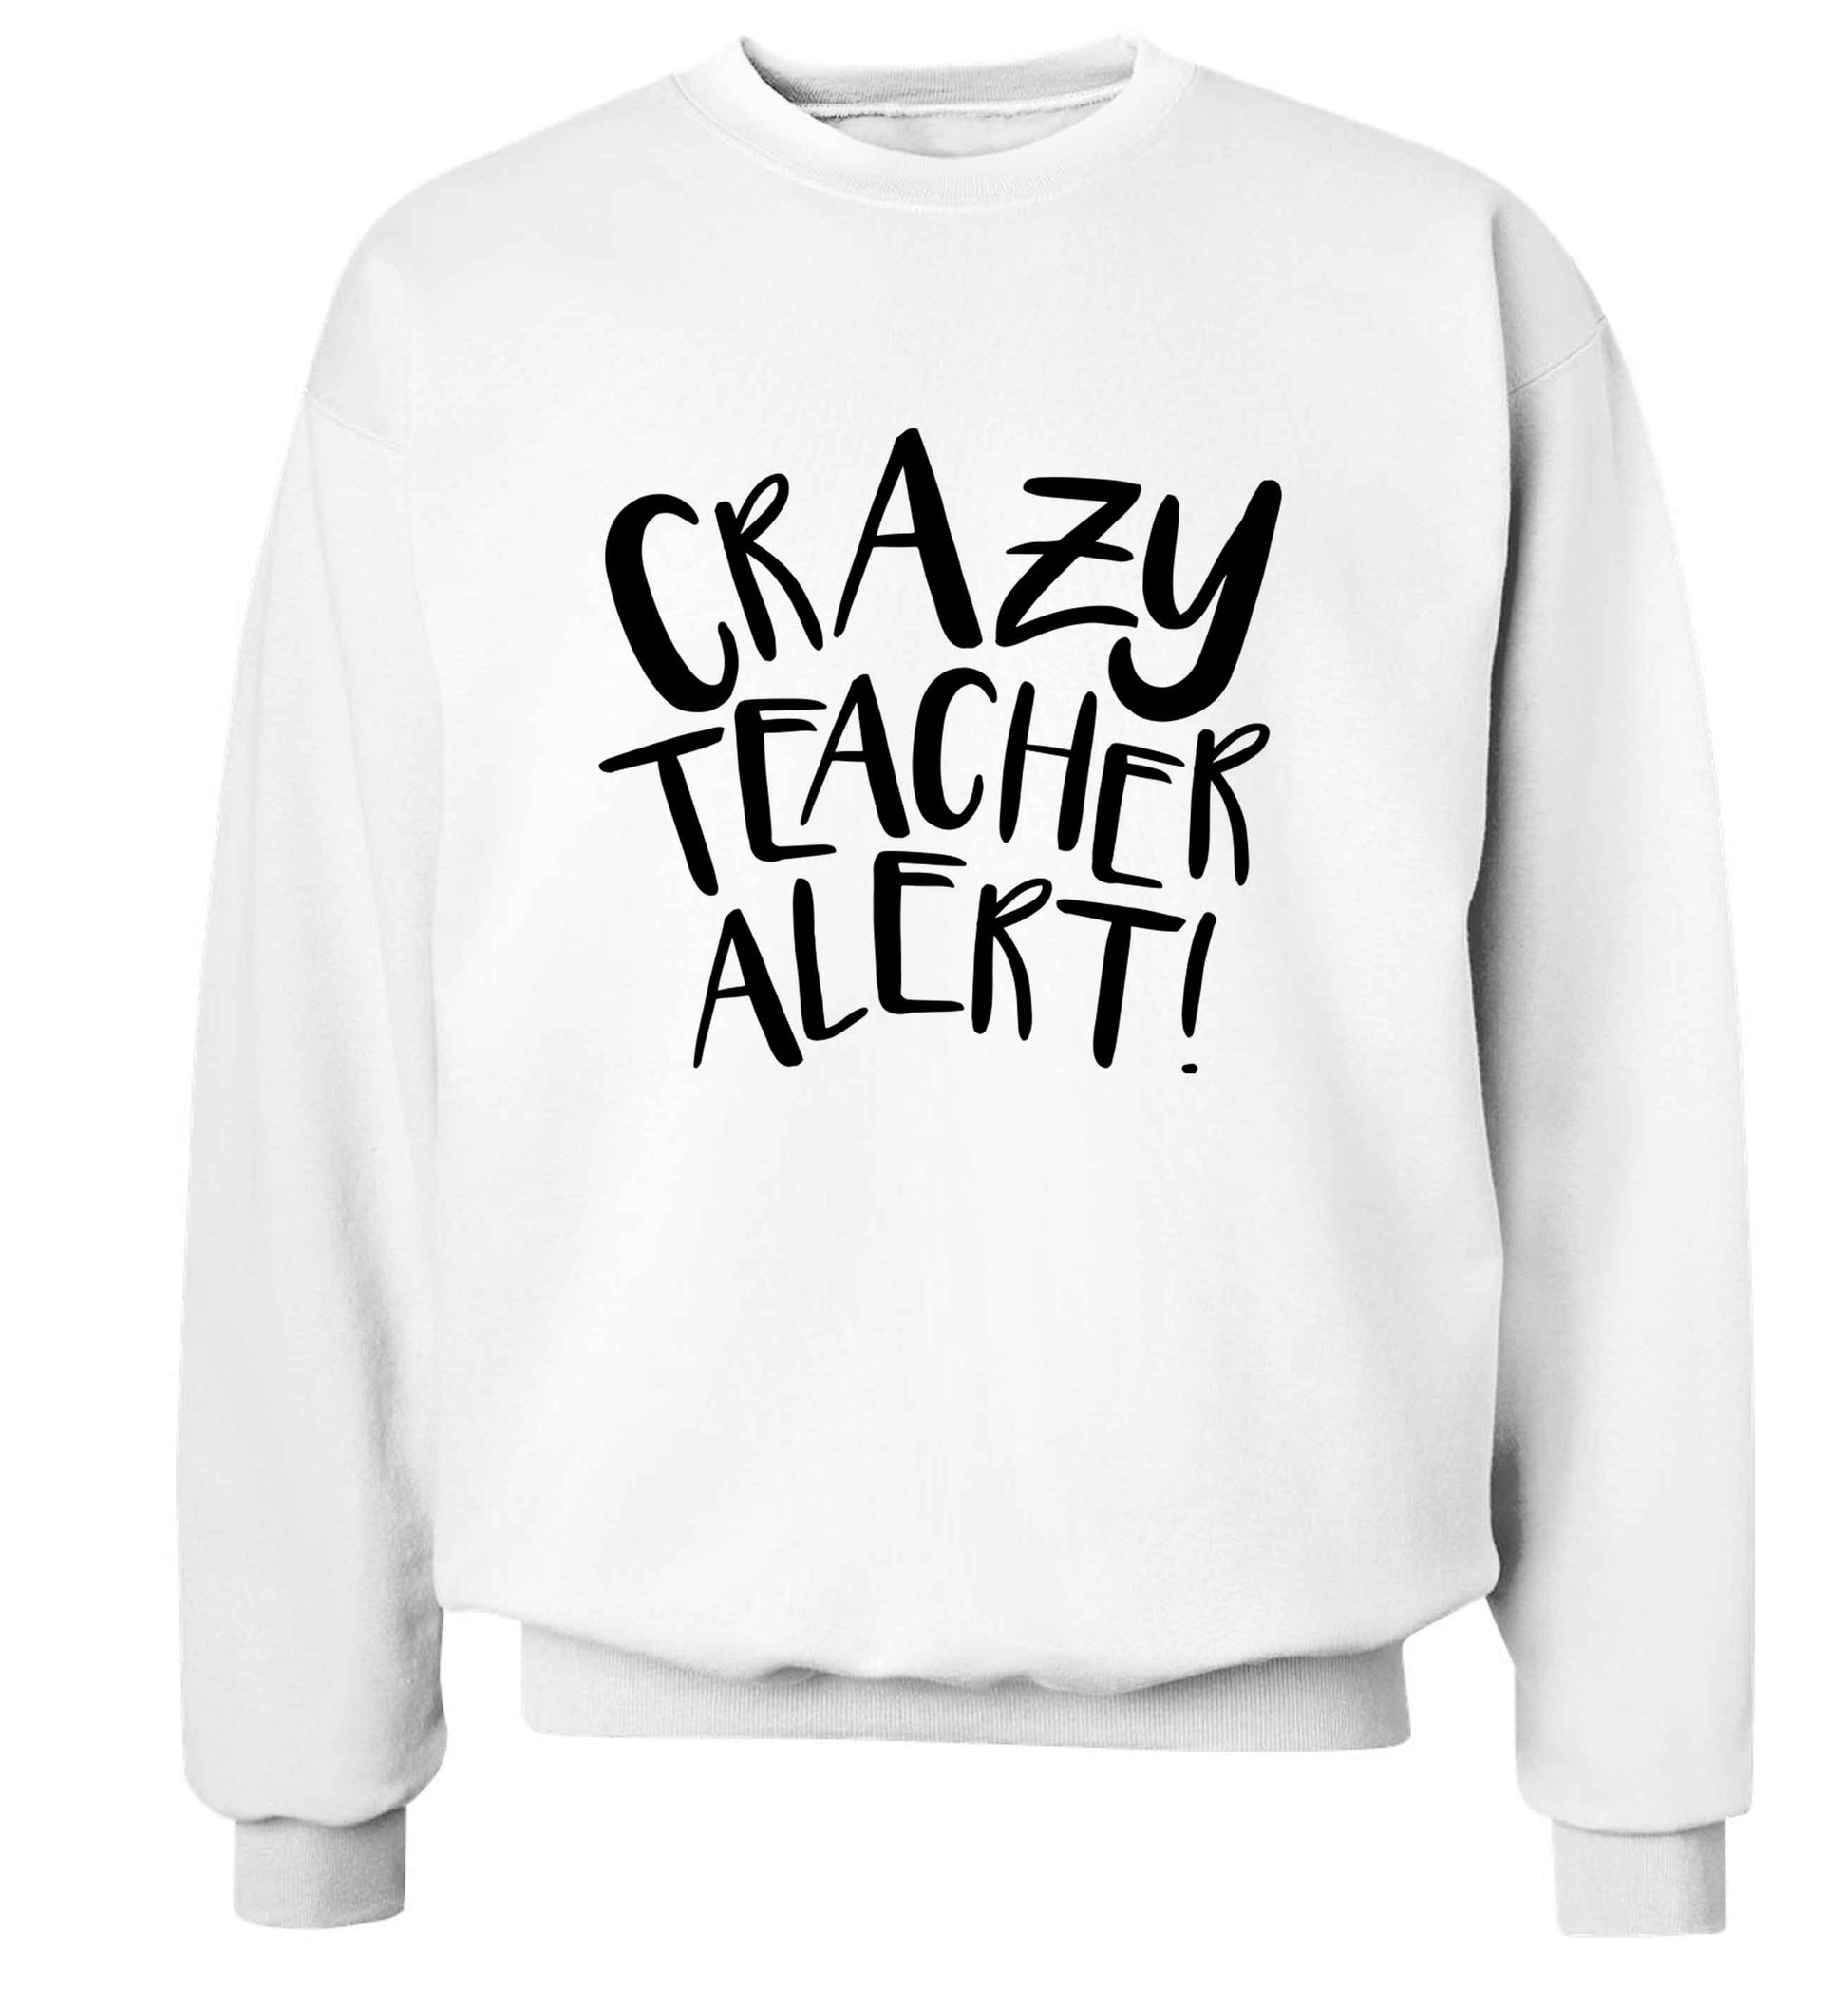 Crazy teacher alert adult's unisex white sweater 2XL